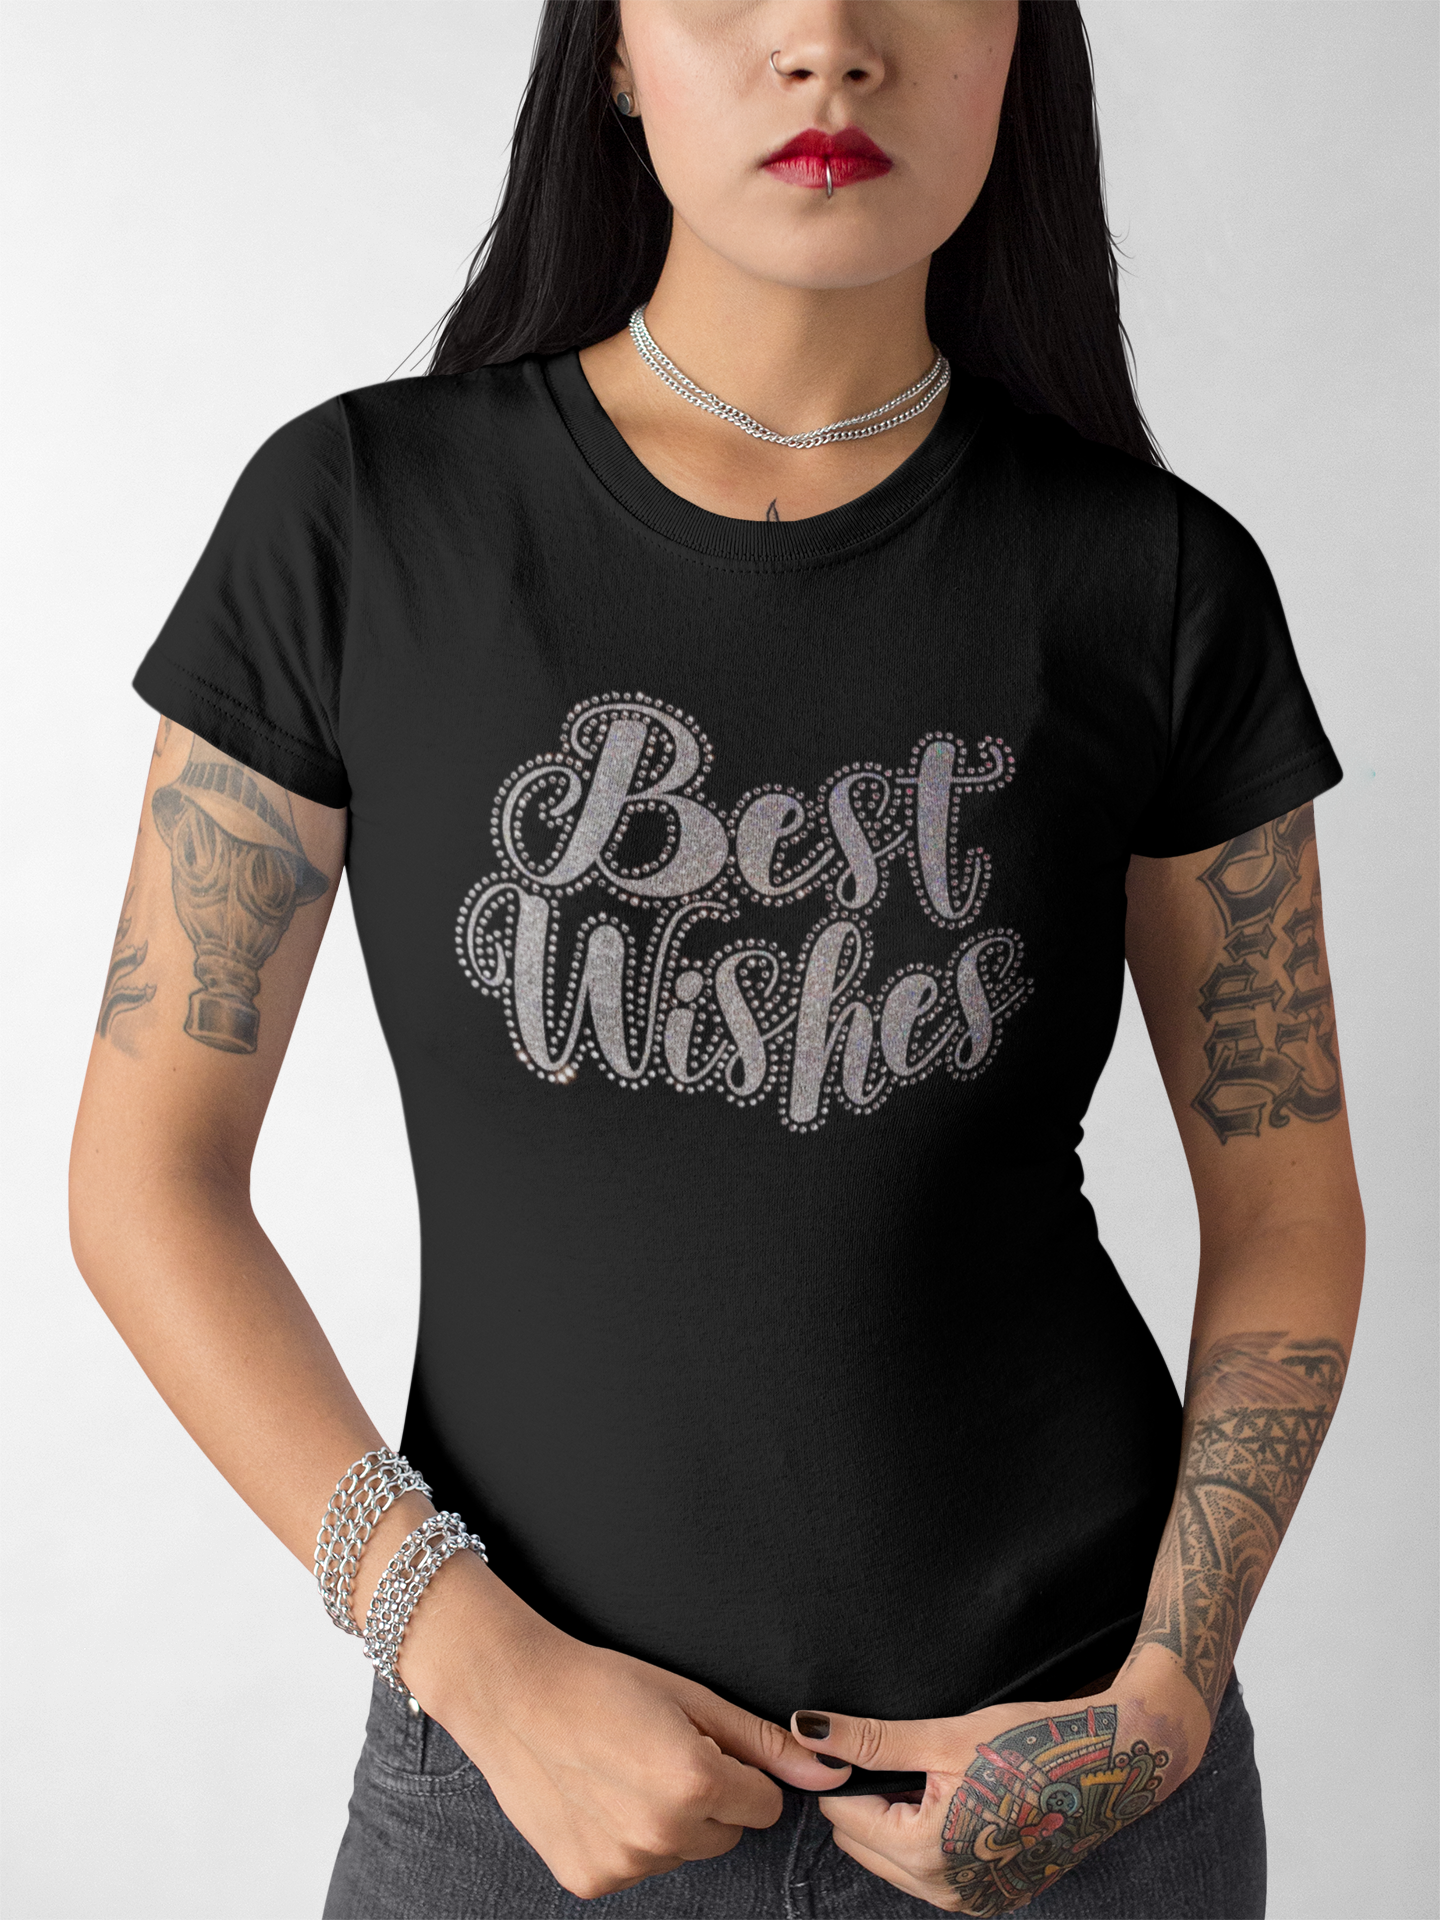 Best Wishes Rhinestones and HTV Black Crew Neck Women's T-Shirts